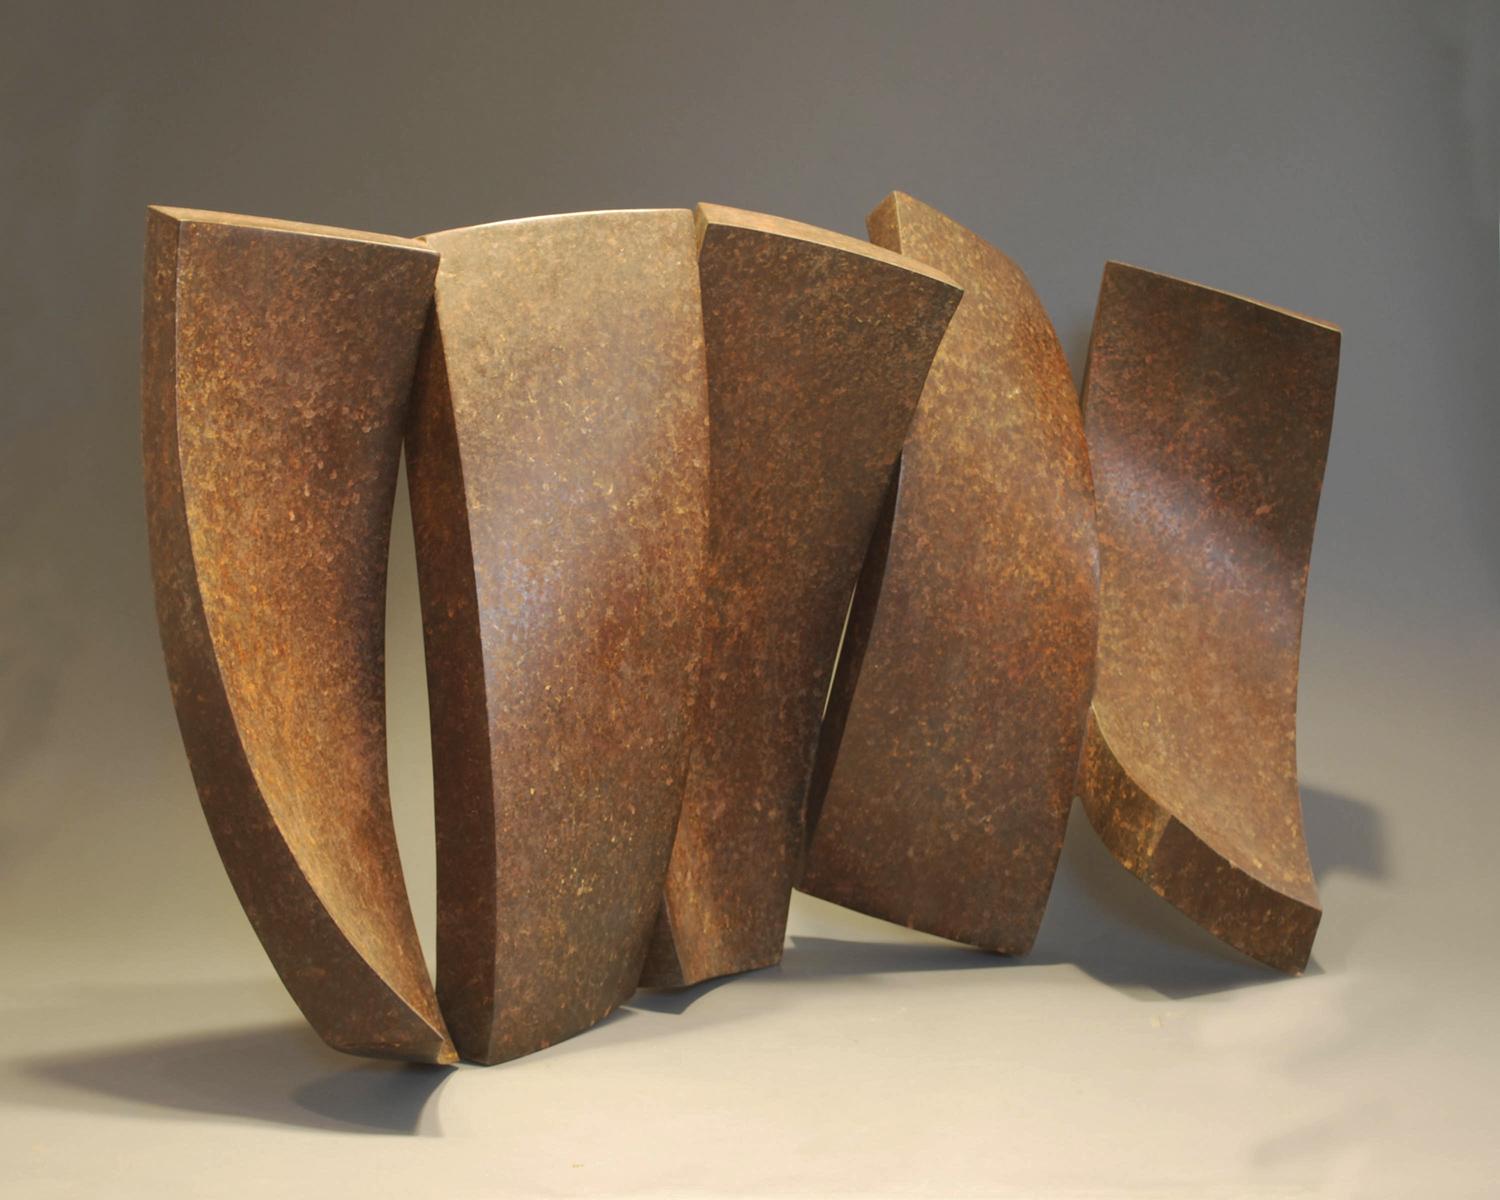 Frank Morbillo Abstract Sculpture - "Running Dialog" steel sculpture